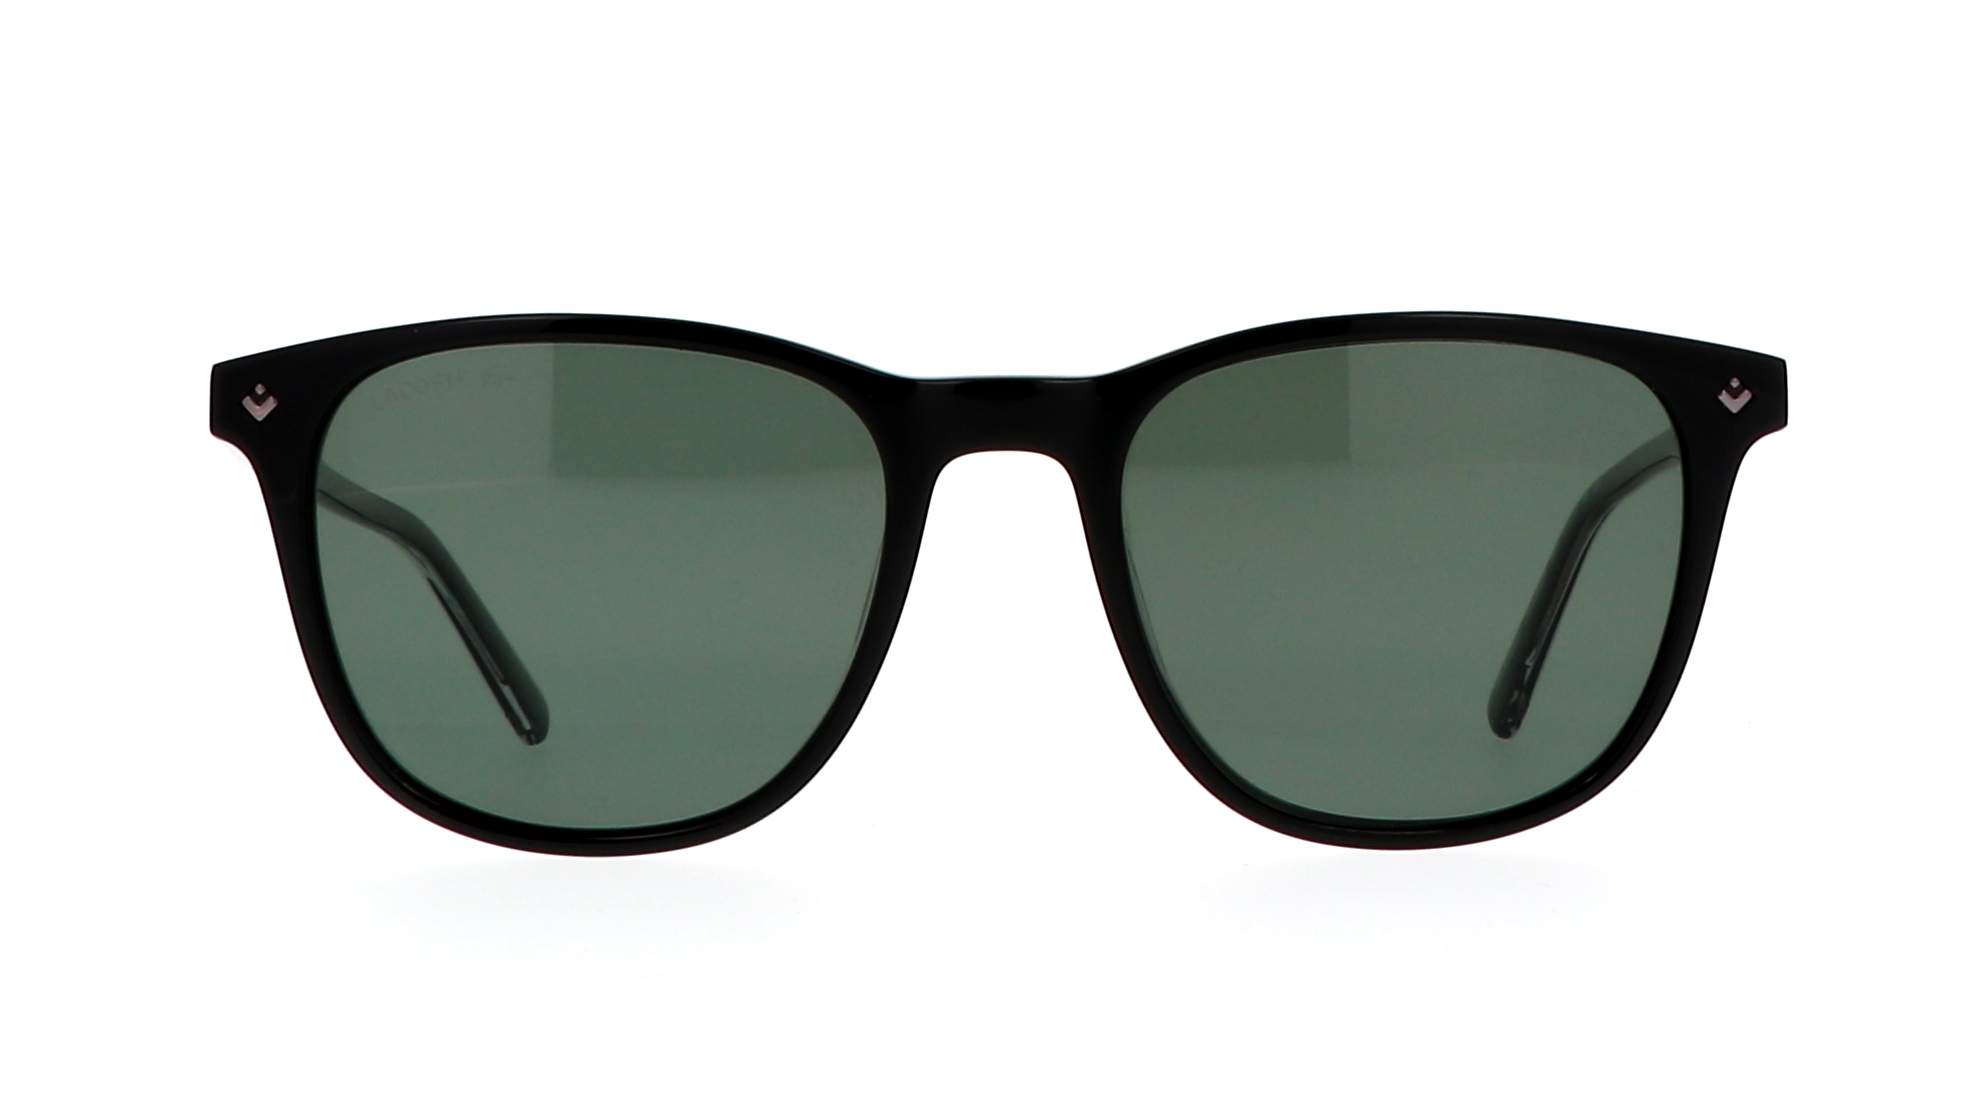 lacoste polarized sunglasses